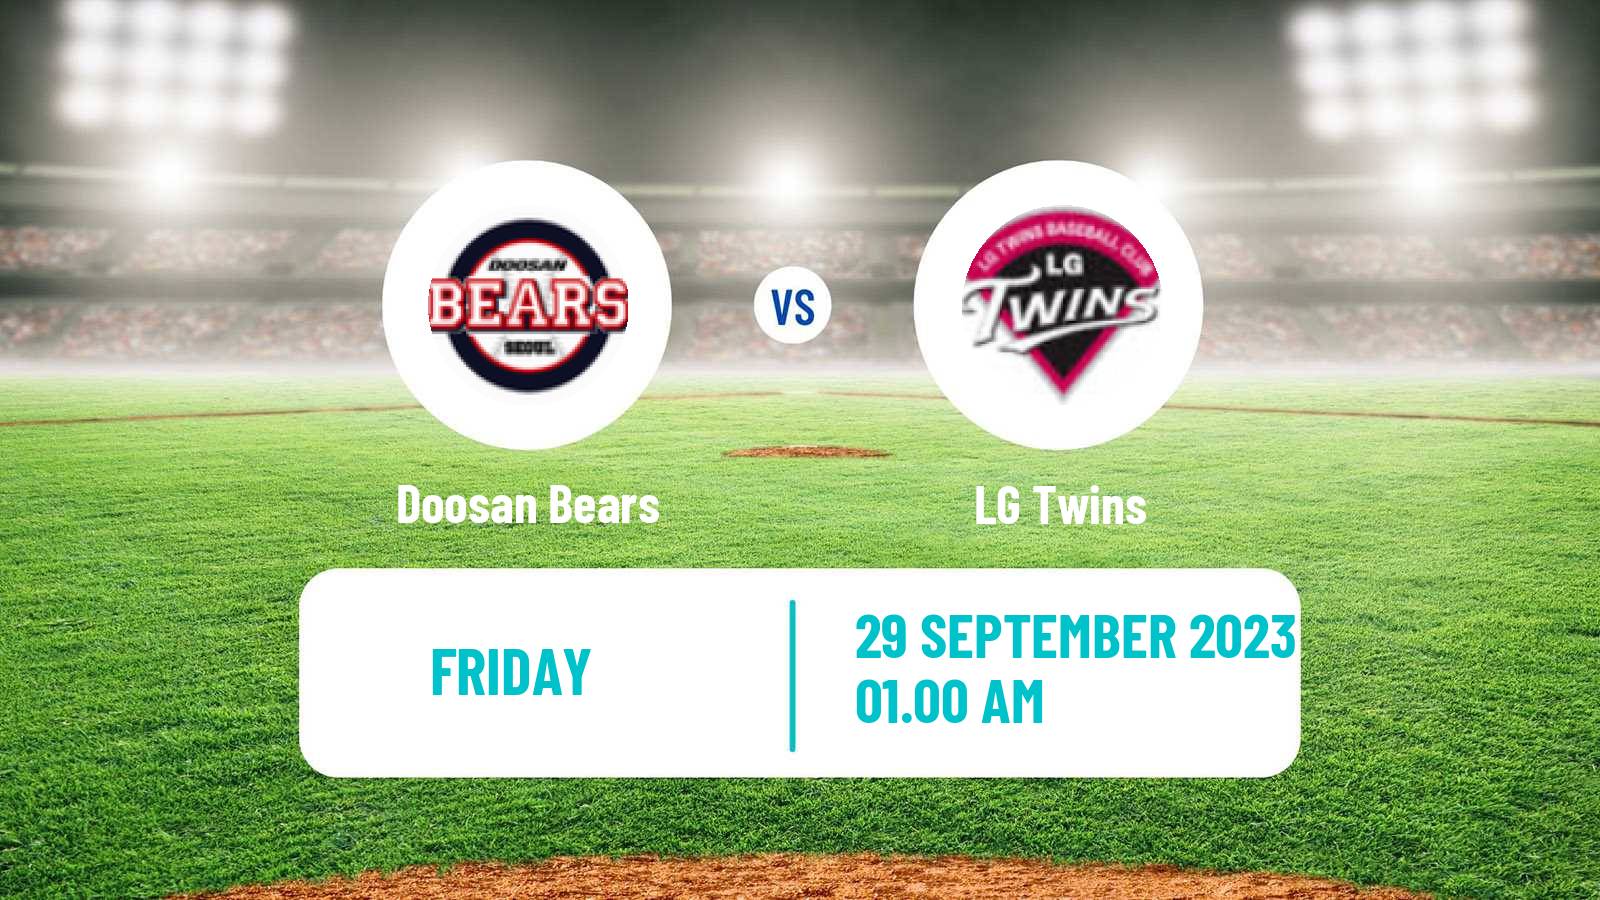 SSG Landers Doosan Bears predictions, where to watch, live